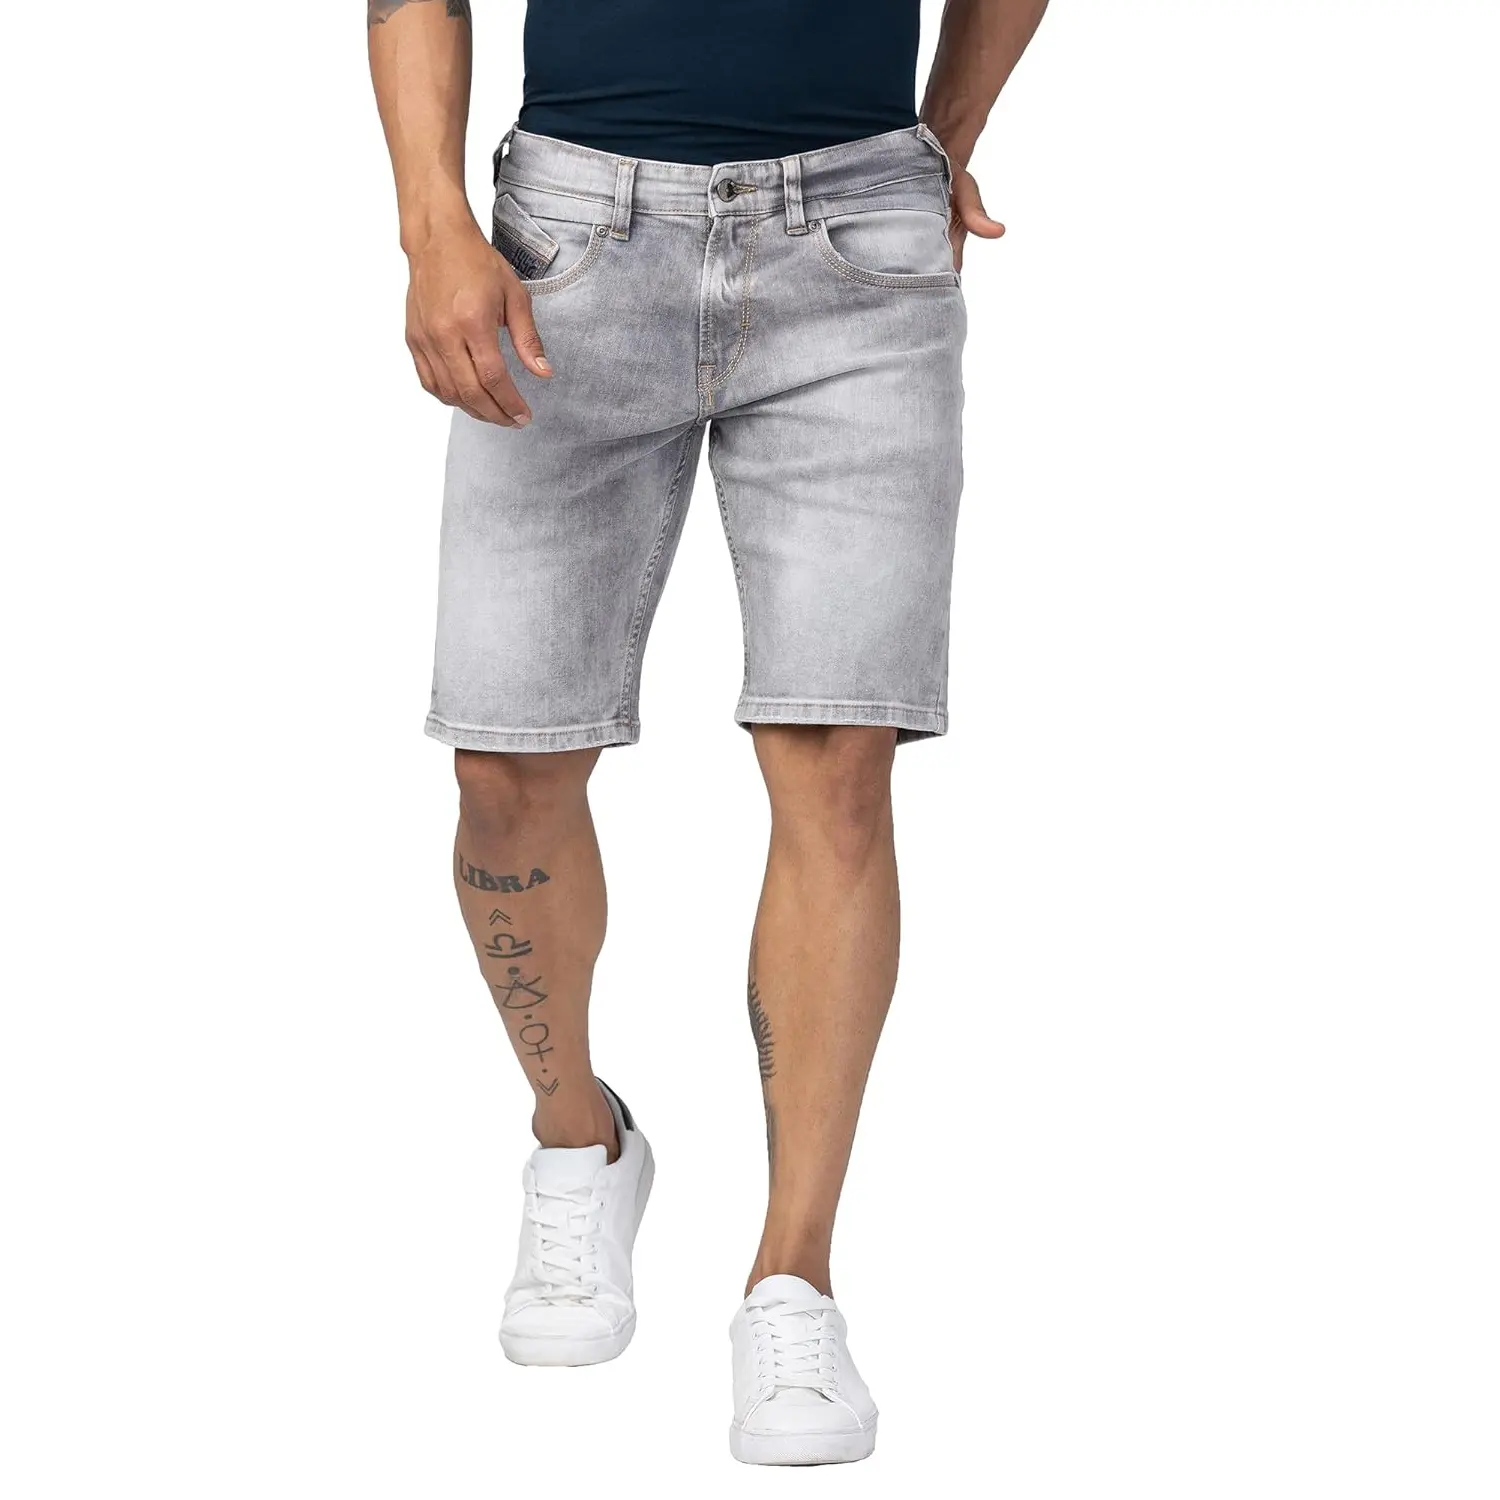 Premium Quality High Strength Fashionable Best Men's Denim Jeans Shorts Pant Custom Design Casual Men Denim Short Pants From BD